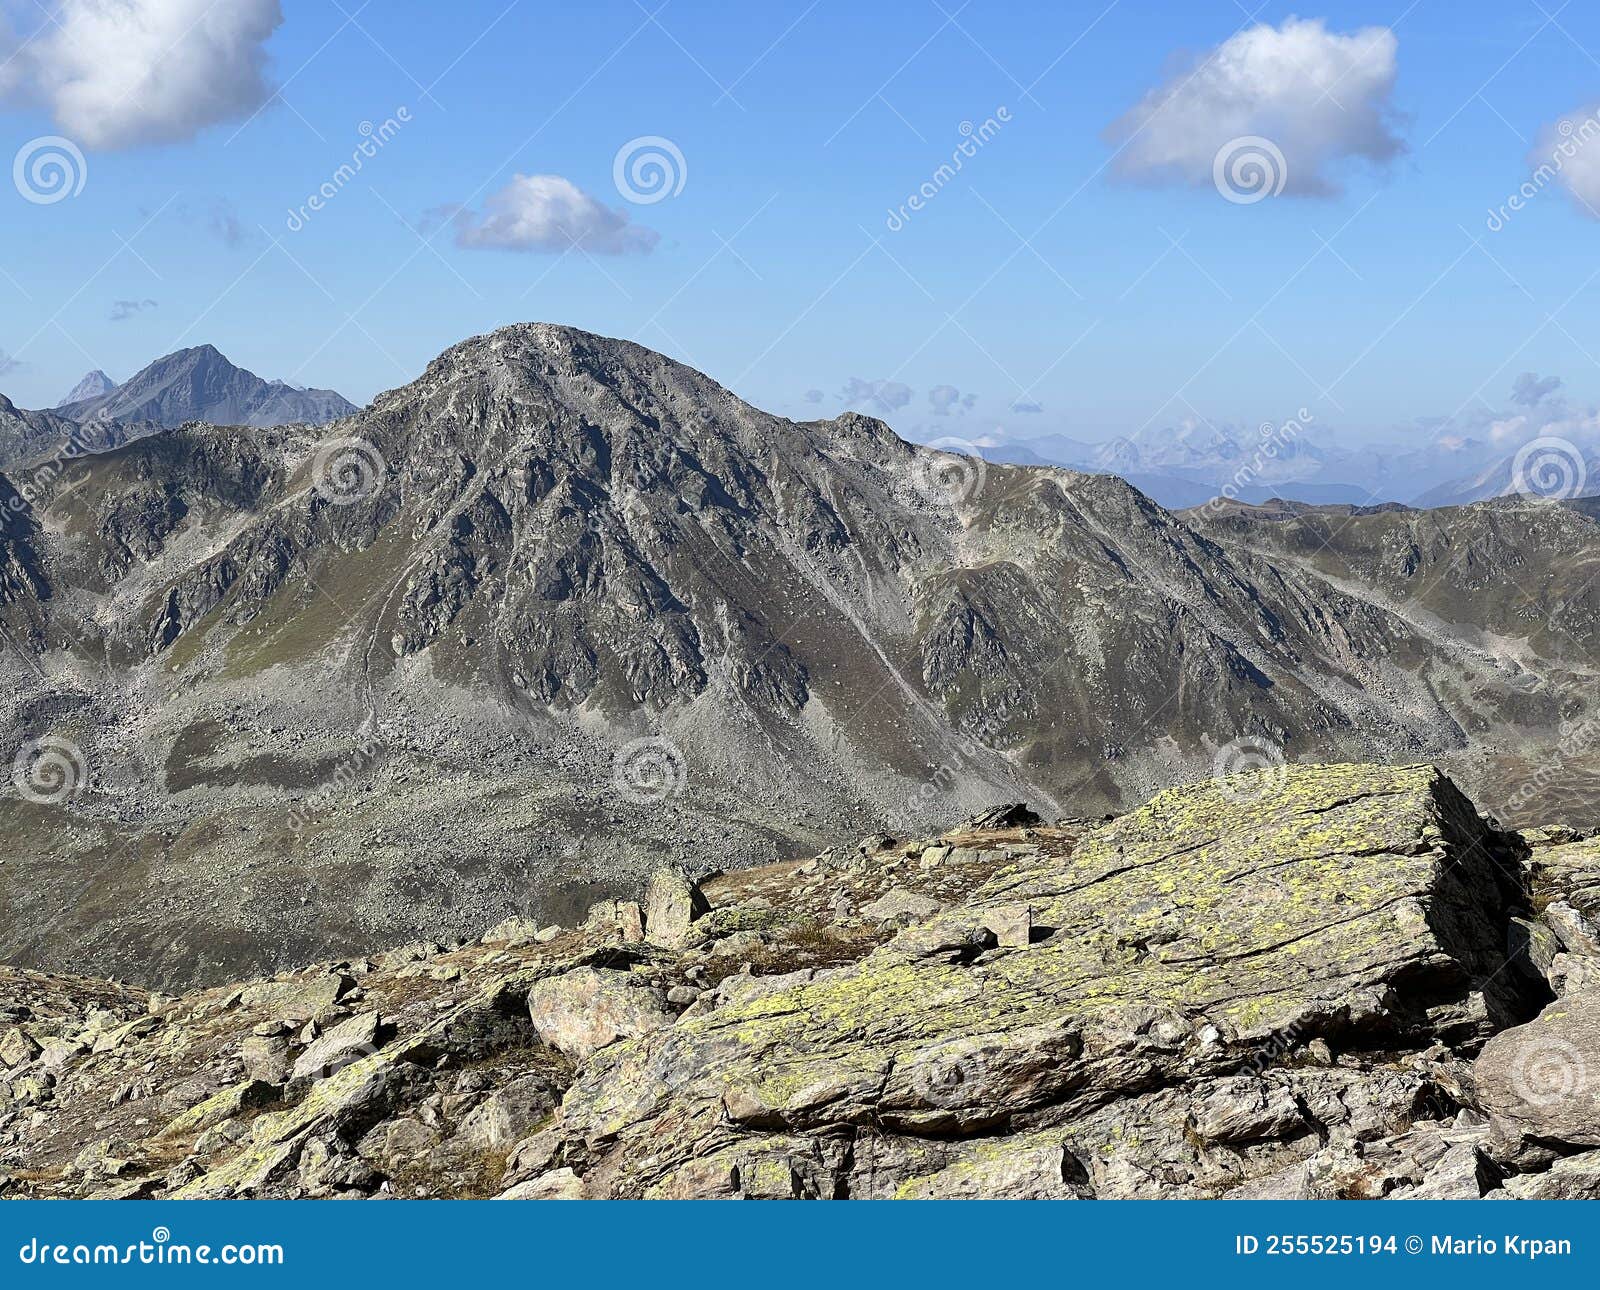 Rocky Alpine Peak Sentisch Horn 2826 M of the Albula Alps Mountain ...